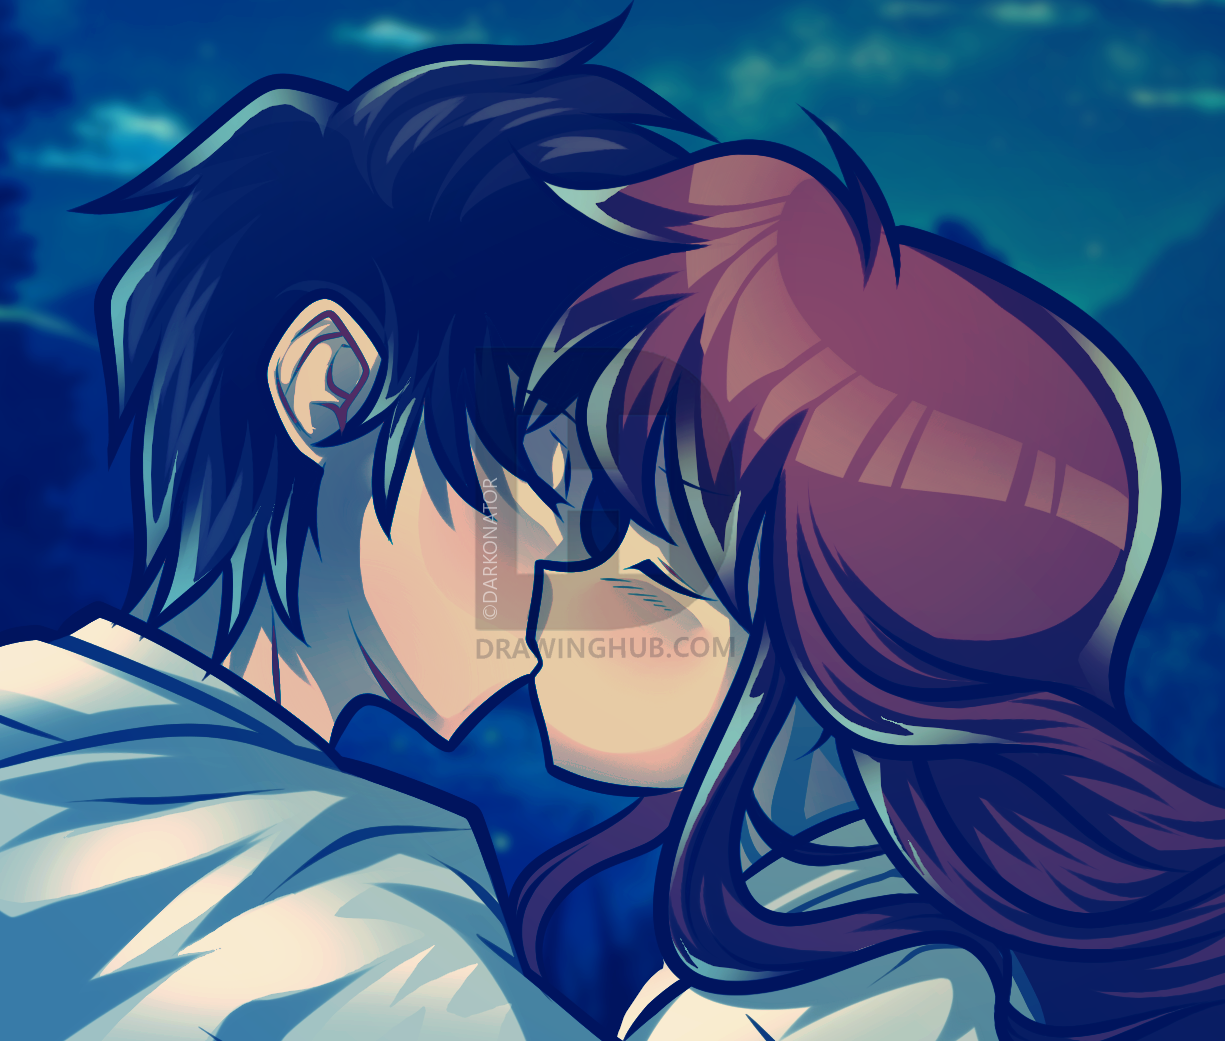 Anime Couple Kissing Drawing. Explore